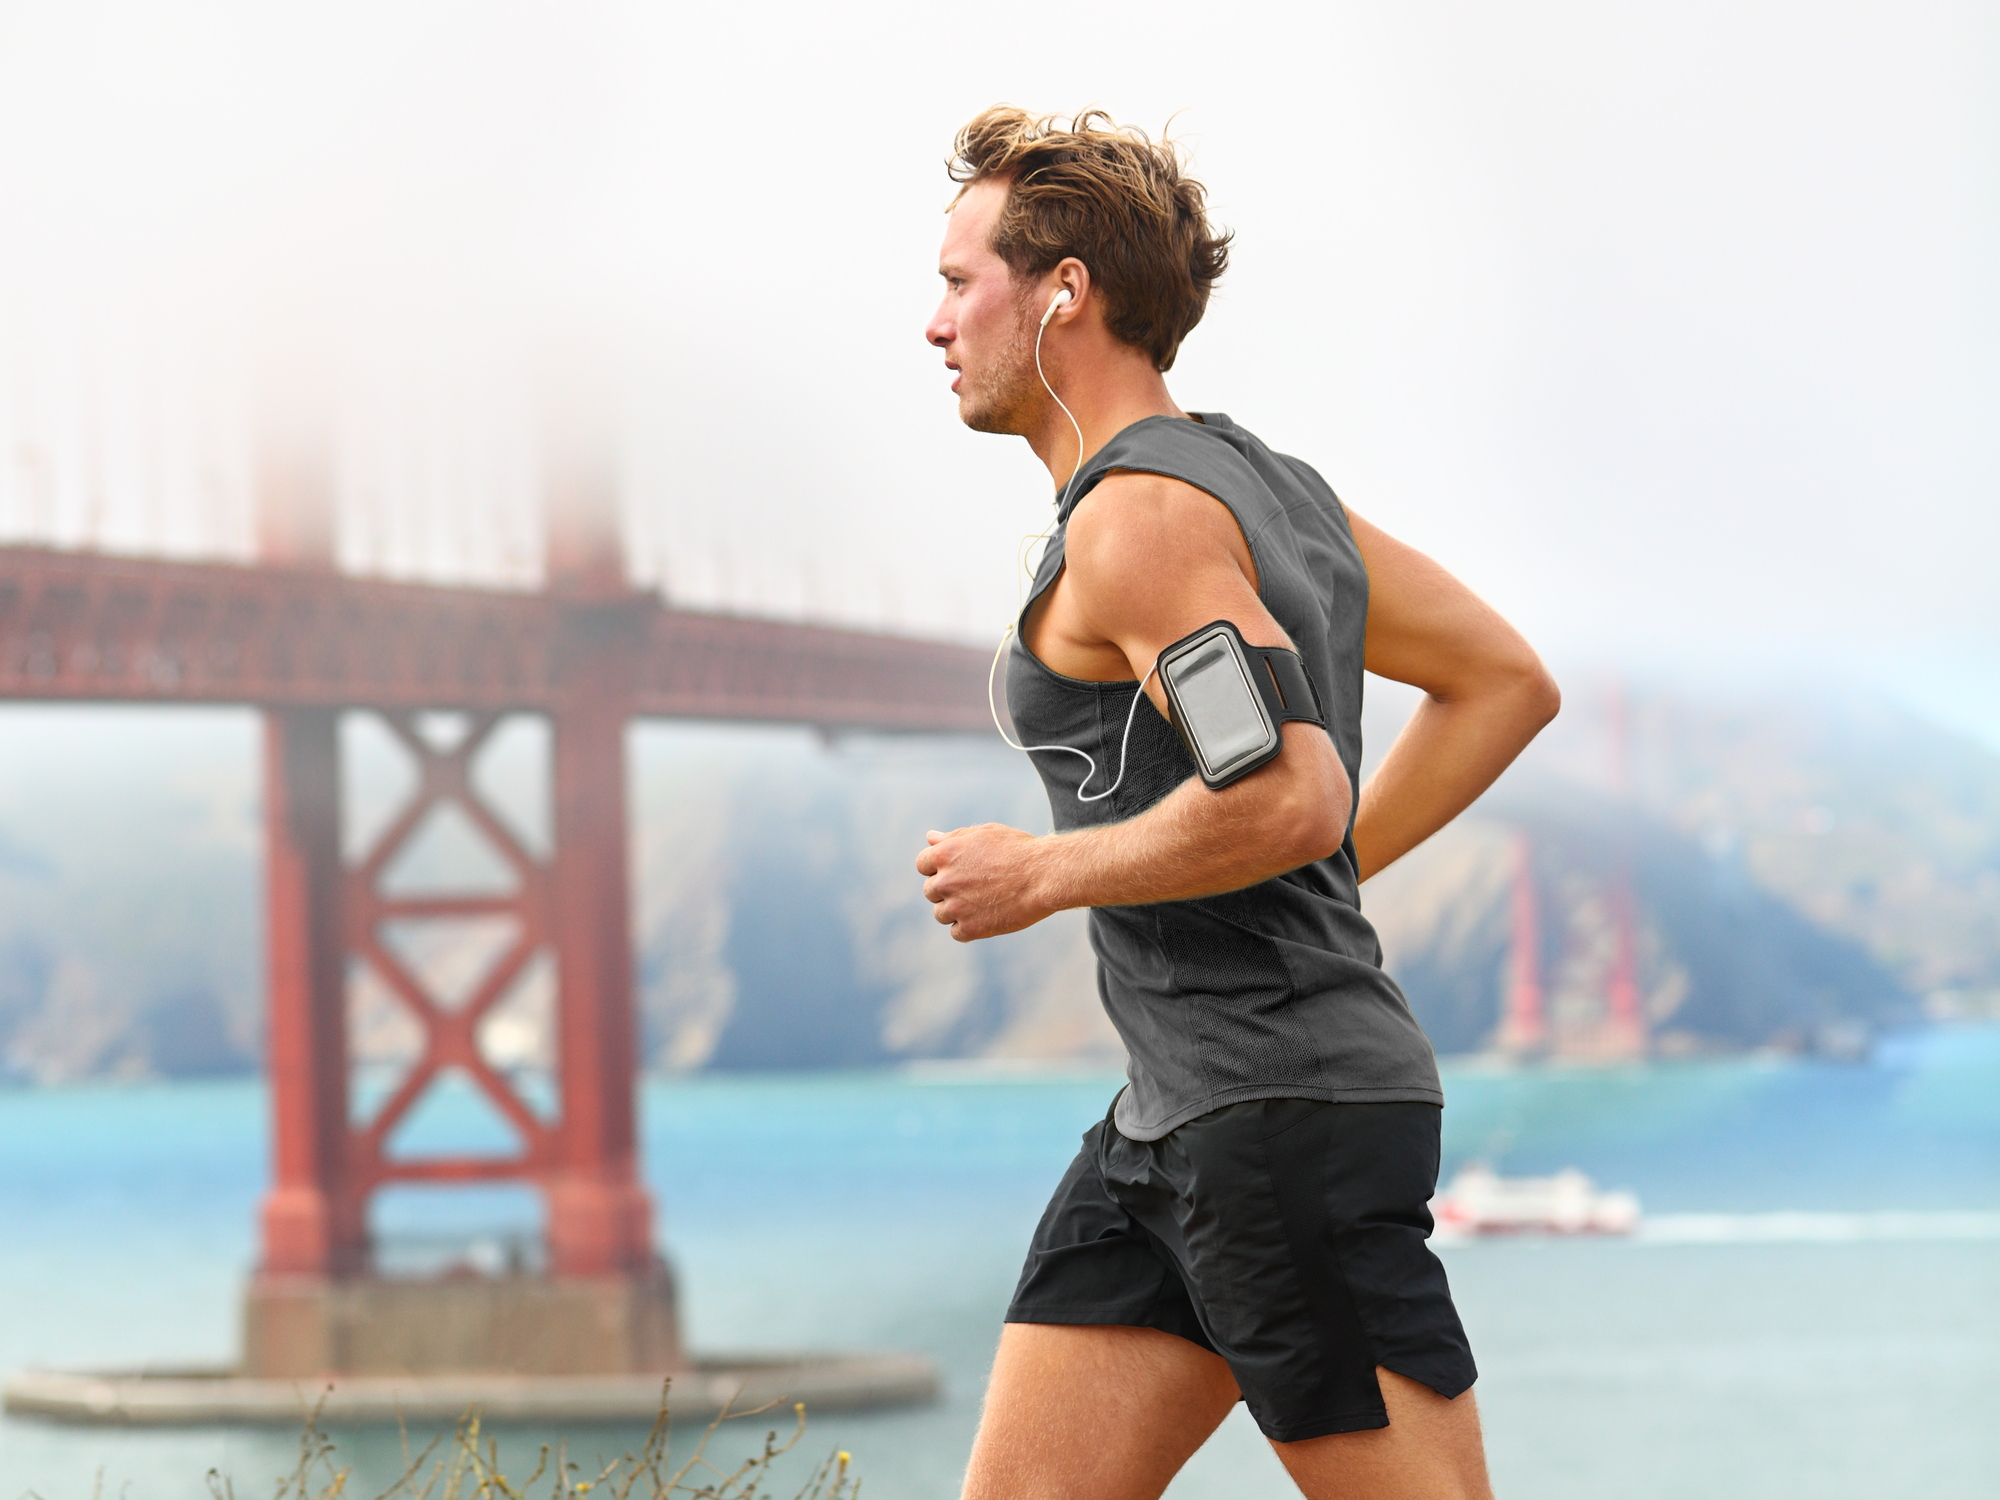 A man runs in front of San Francisco's Golden Gate bridge